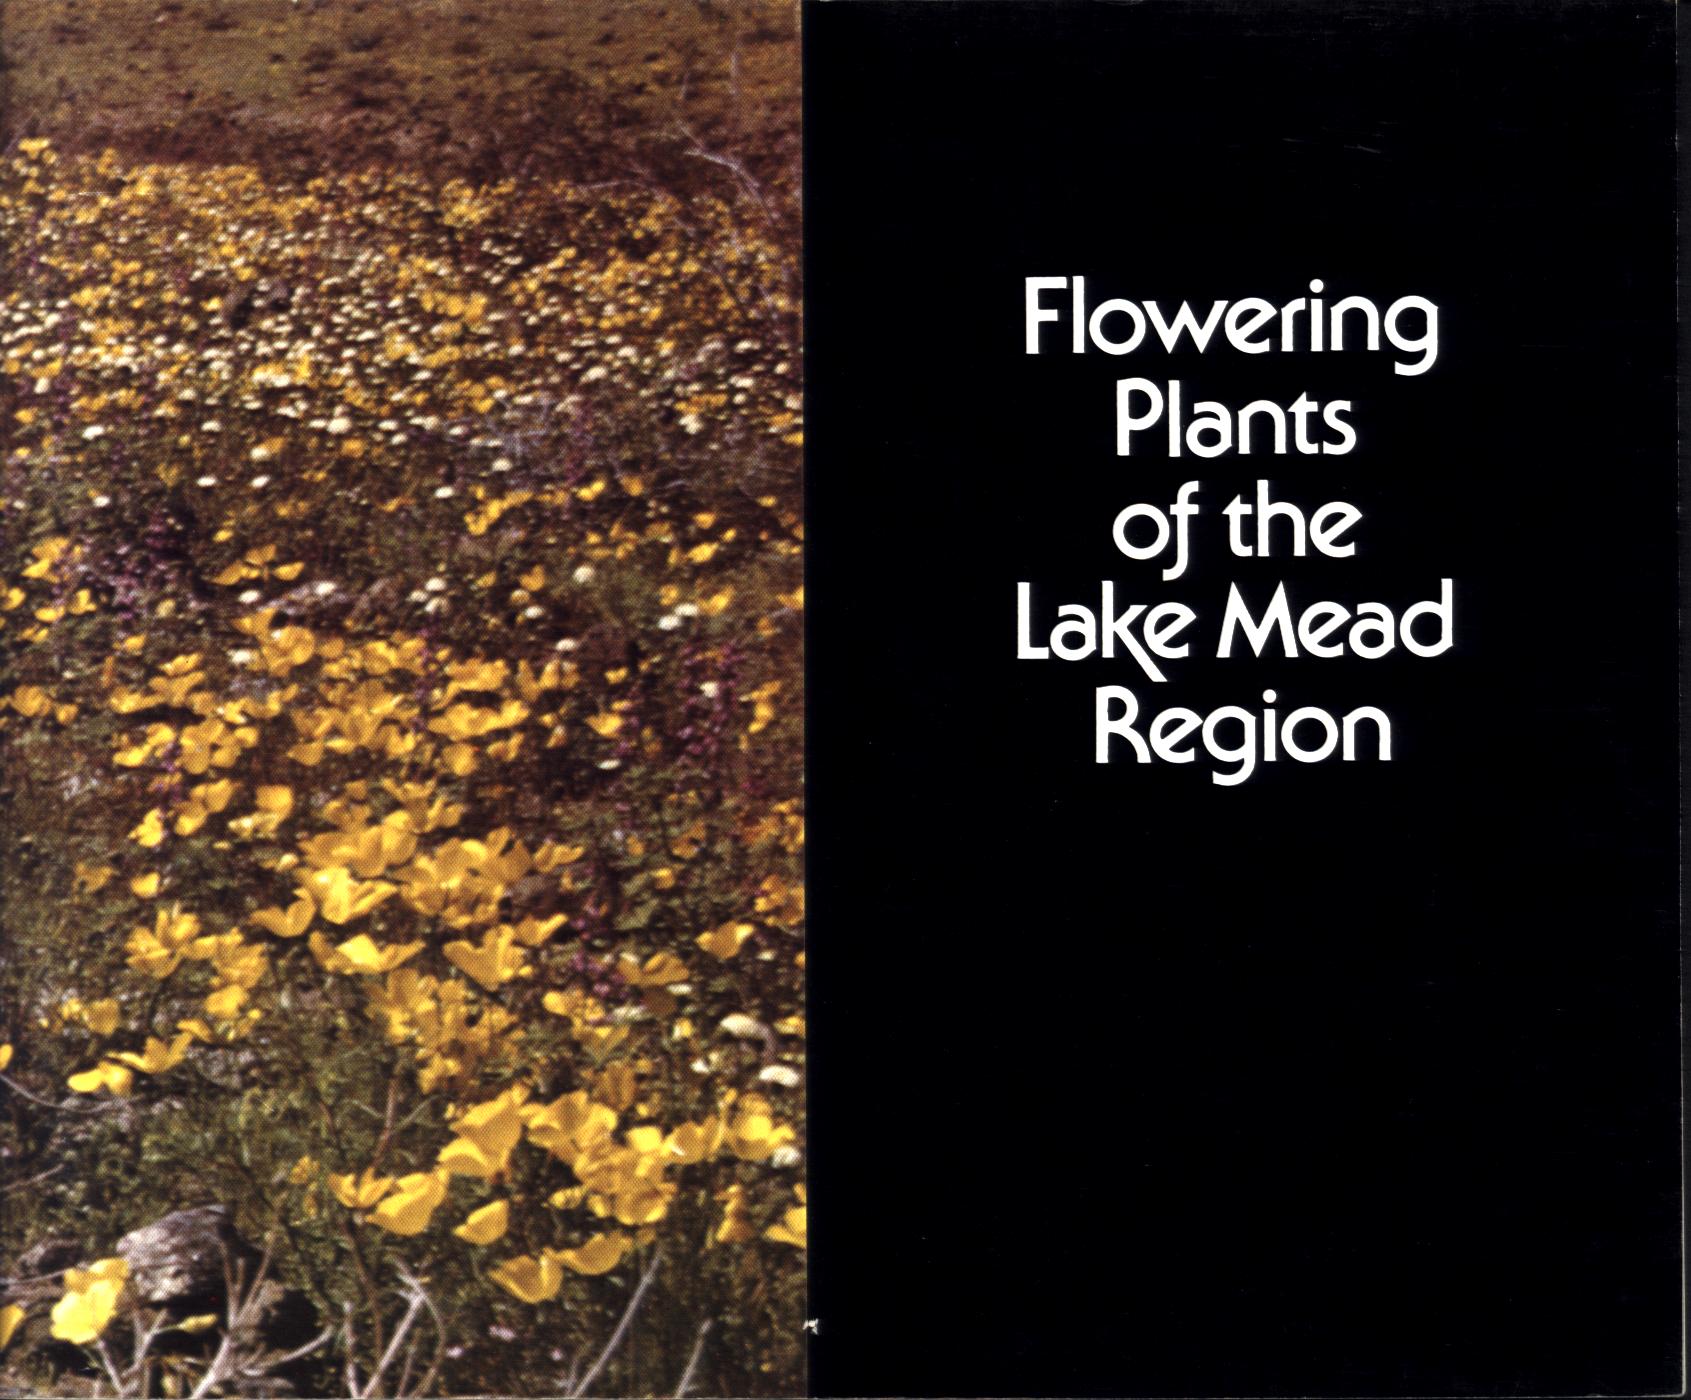 FLOWERING PLANTS OF THE LAKE MEAD REGION.